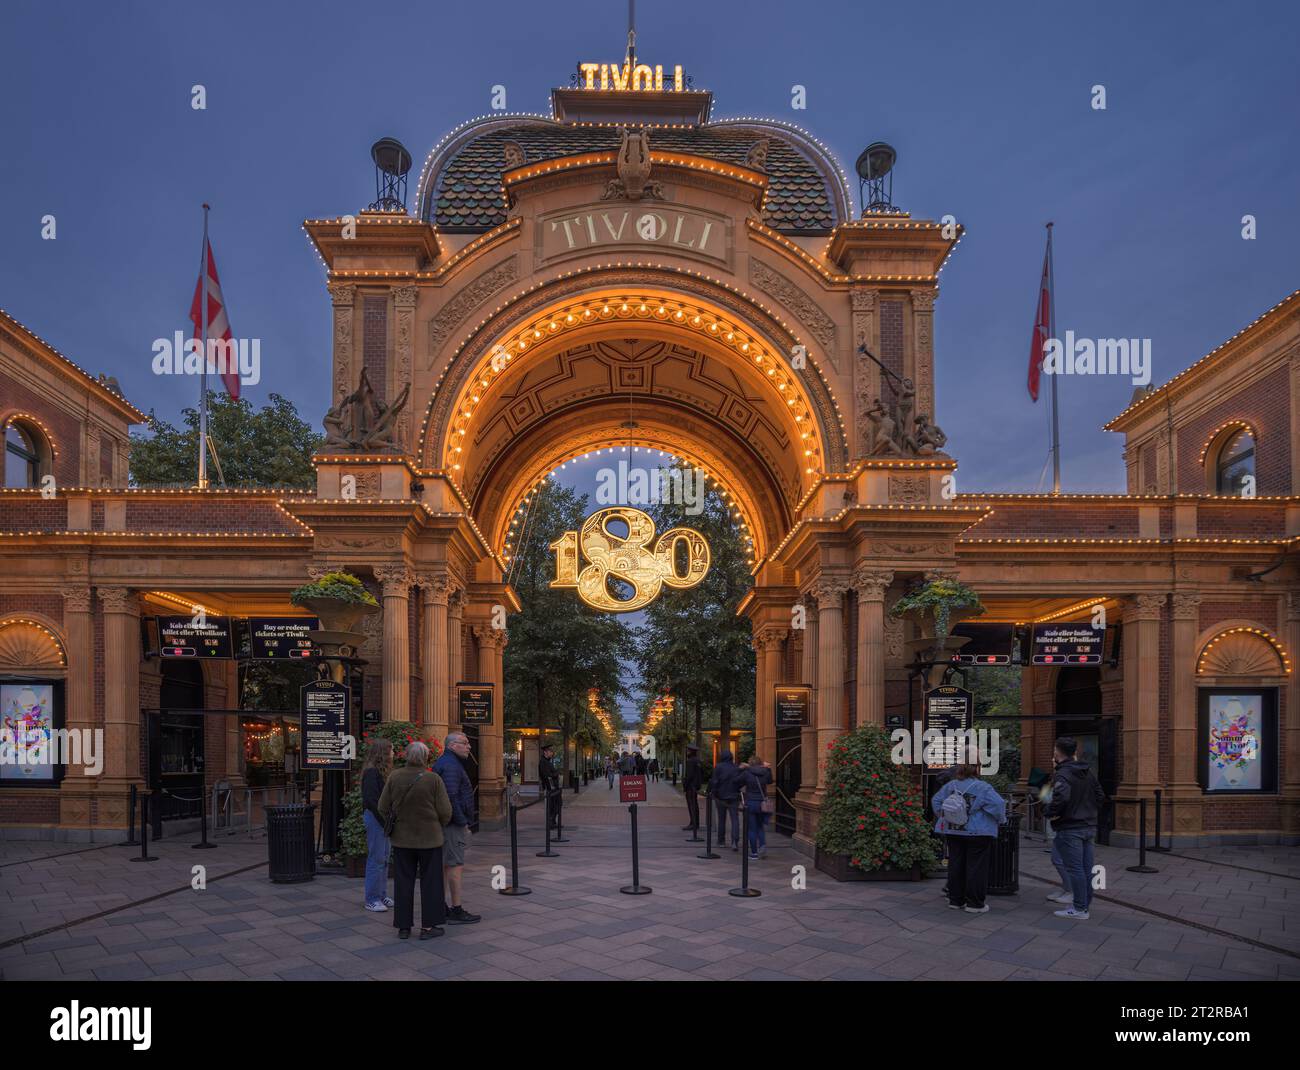 180 aniversary sign at the main entrance gate of  Tivoli Gardens Amusement Park in Copenhagen, Denmark Stock Photo